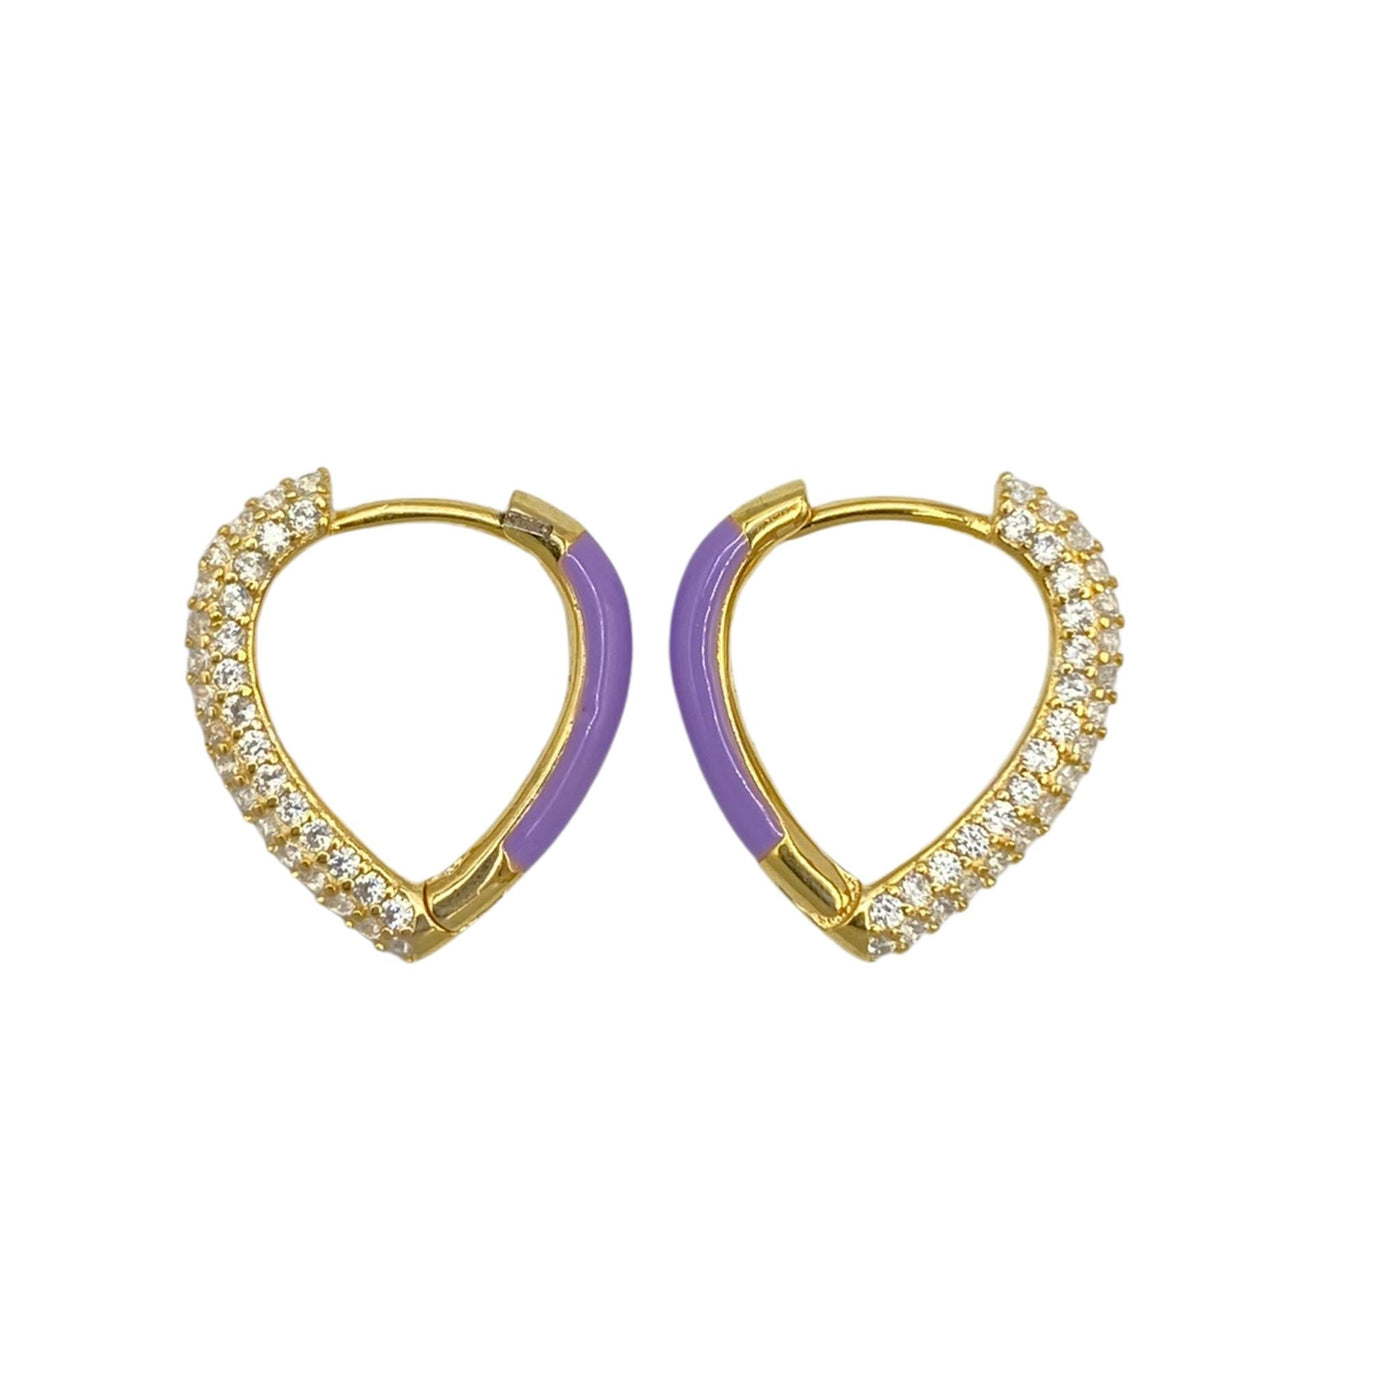 Silver heart-shaped earrings with enamel and zirconia